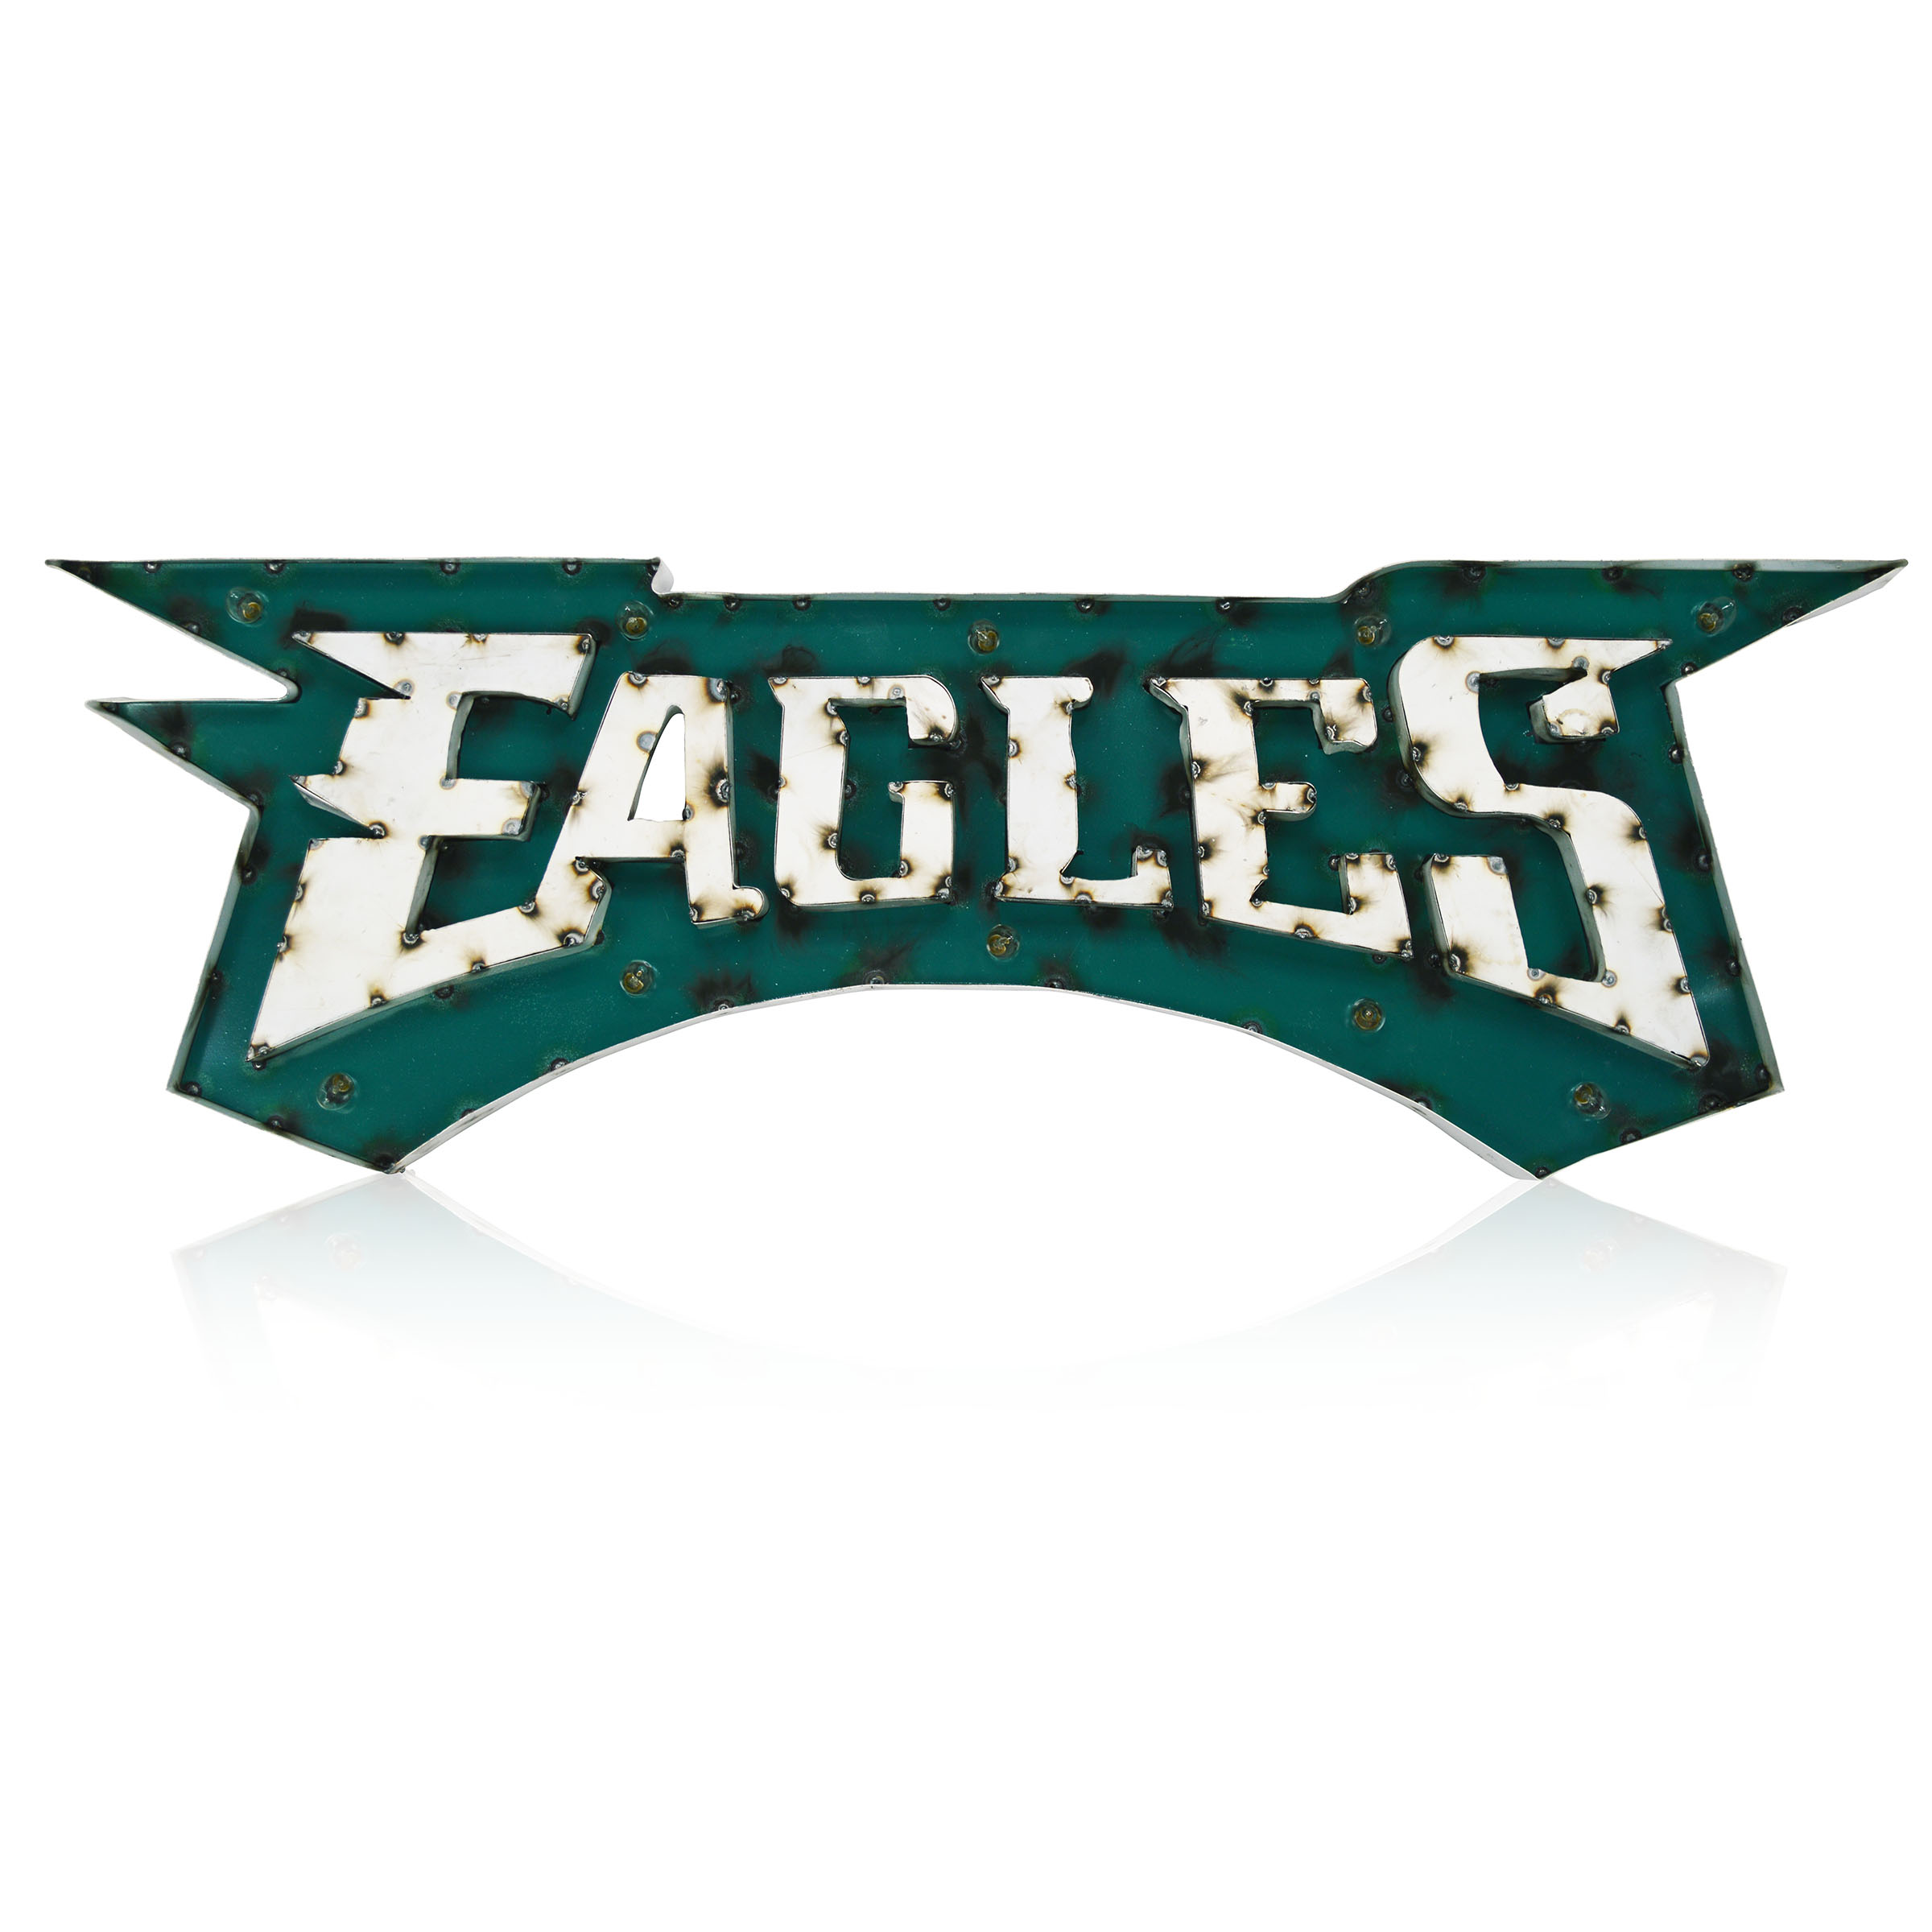 Philadelphia Eagles Recycled Metal Light Sign